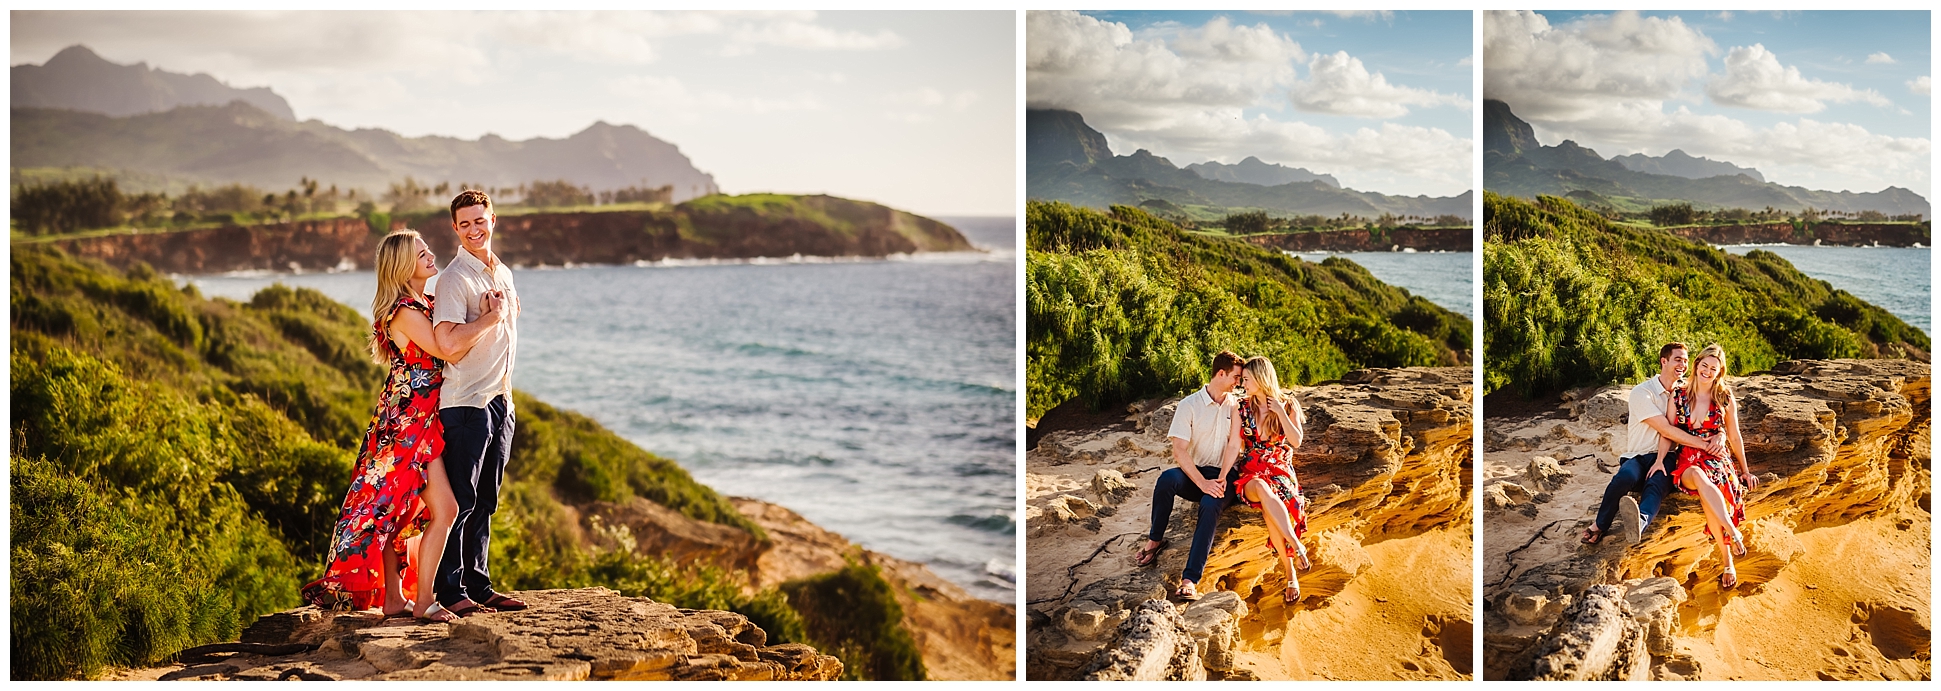 hawaiin-honeymoon-sunrise-portraits-kauai-grand-hystt-destination-photographer_0016.jpg